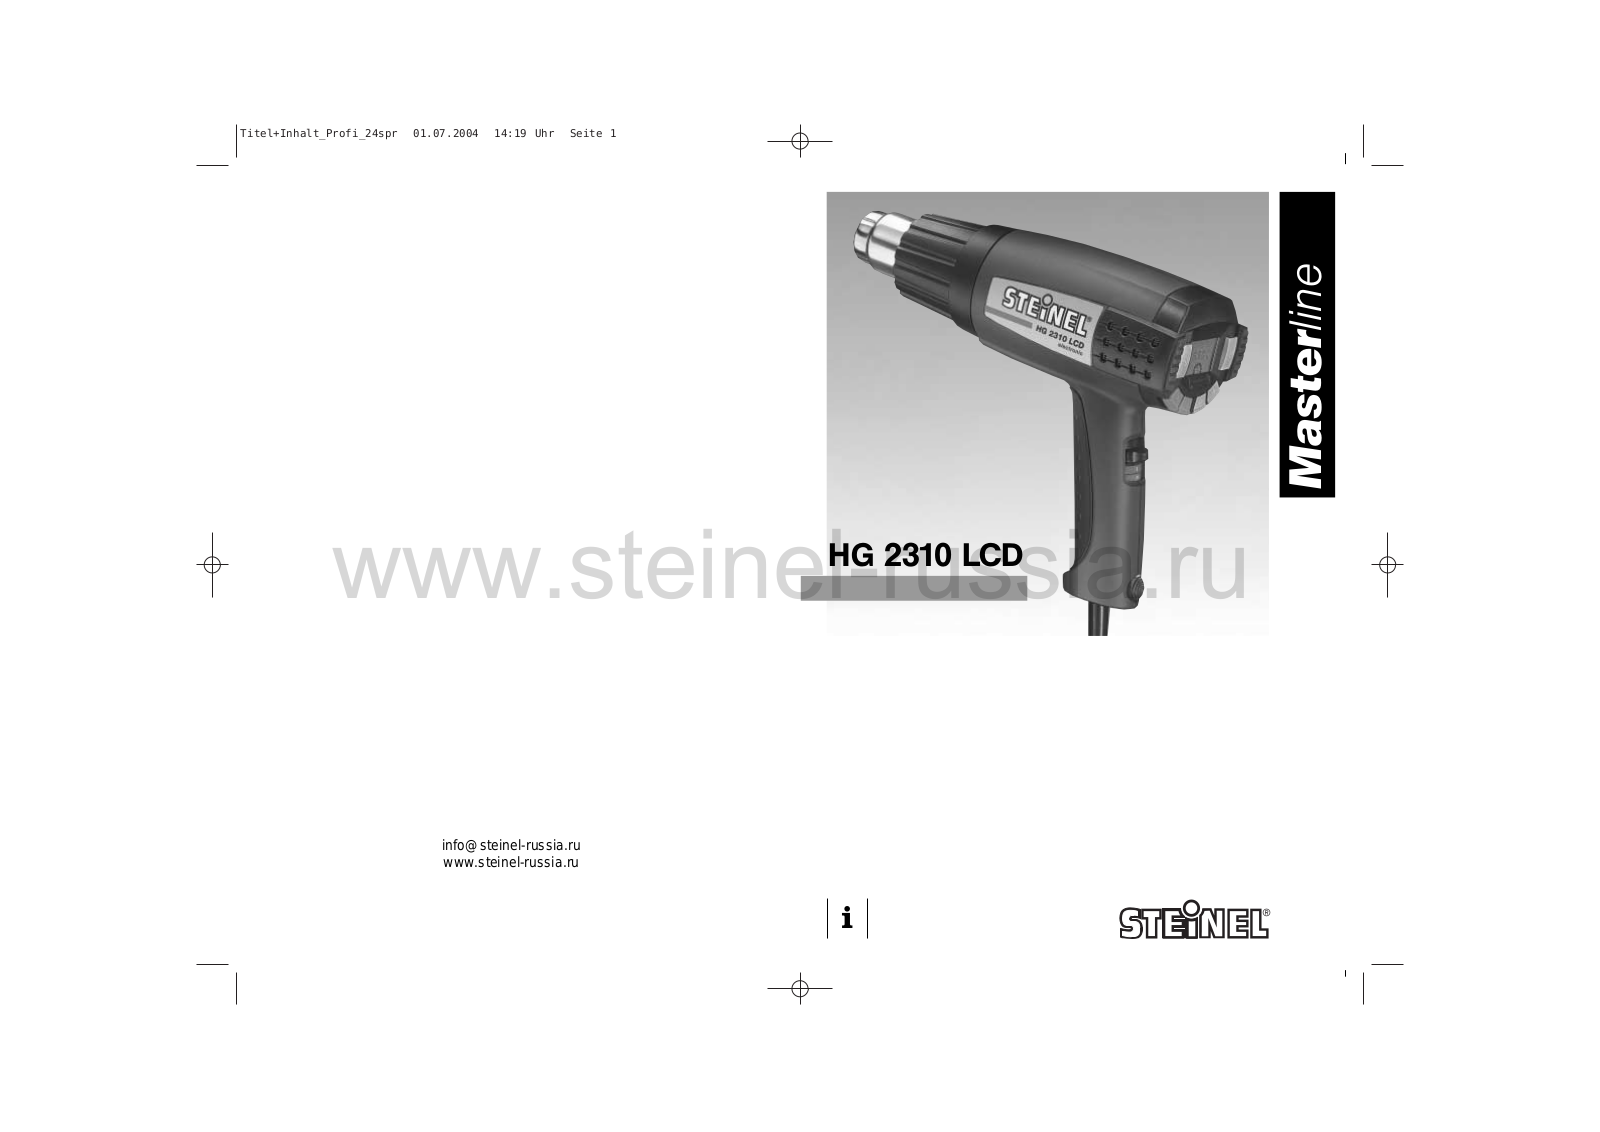 STEINEL HG 2310 LCD User Manual